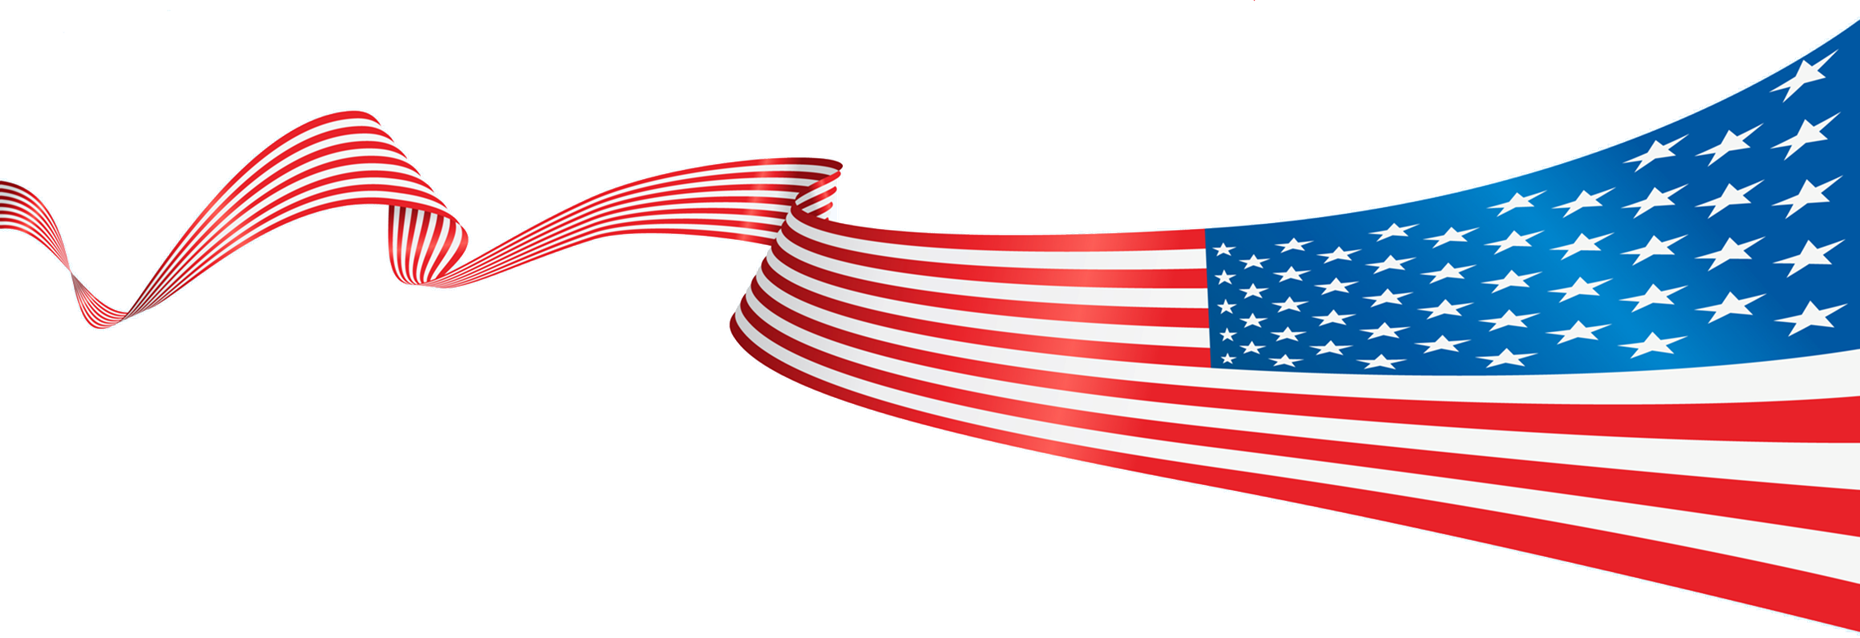 usa clipart banner american